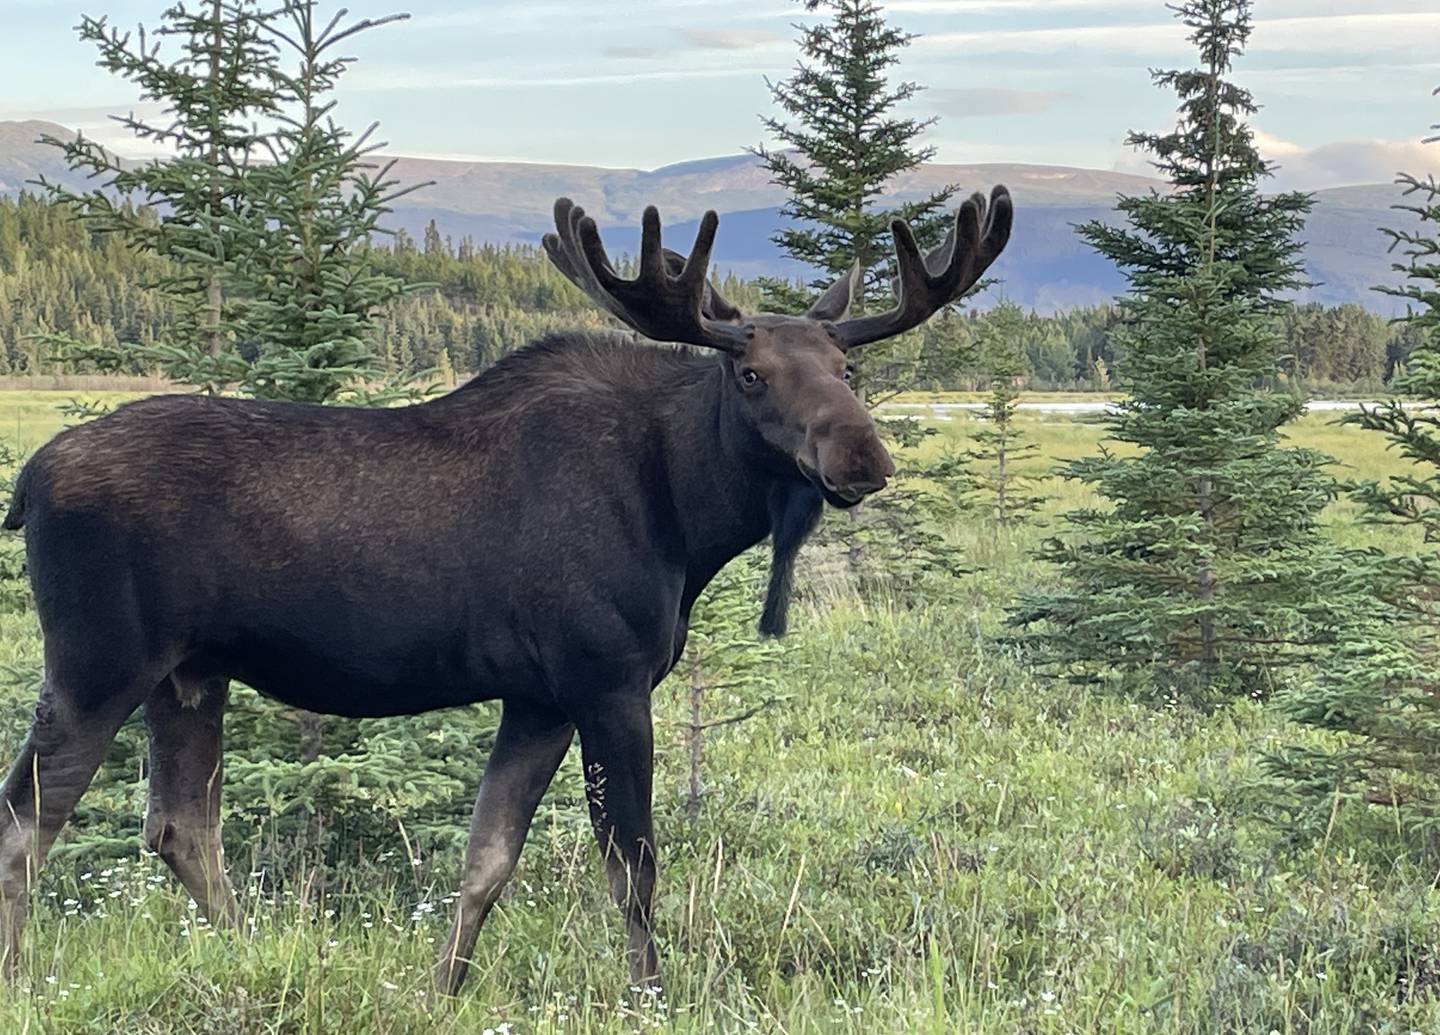 A bull moose looks at a photographer near Whitehorse, Yukon